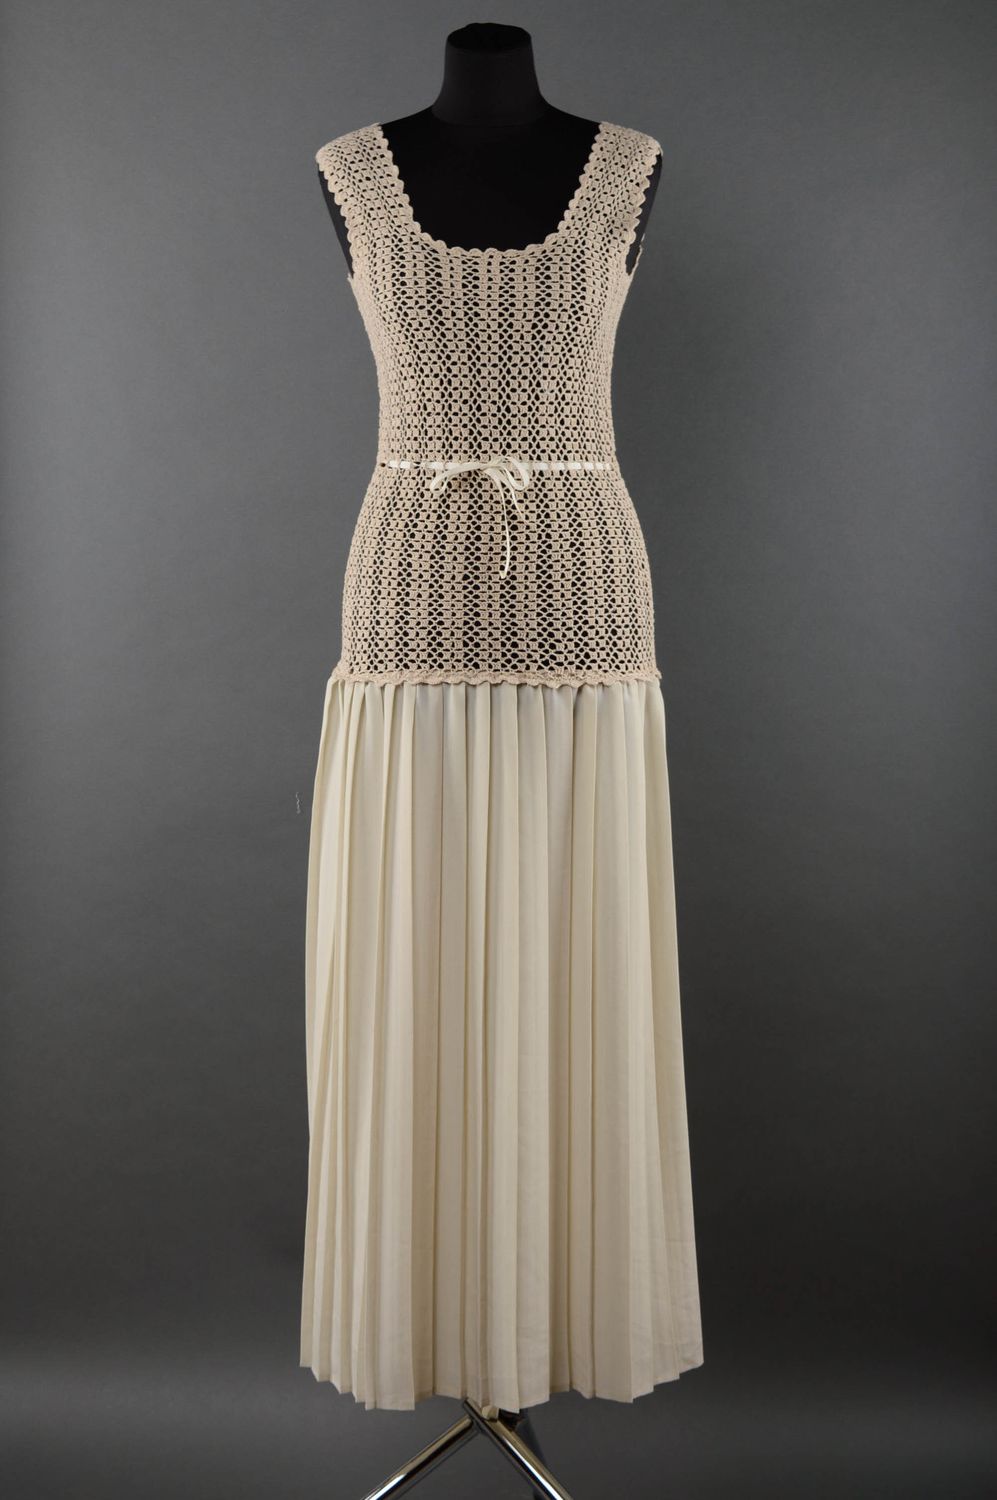 Crochet dress of beige color photo 1